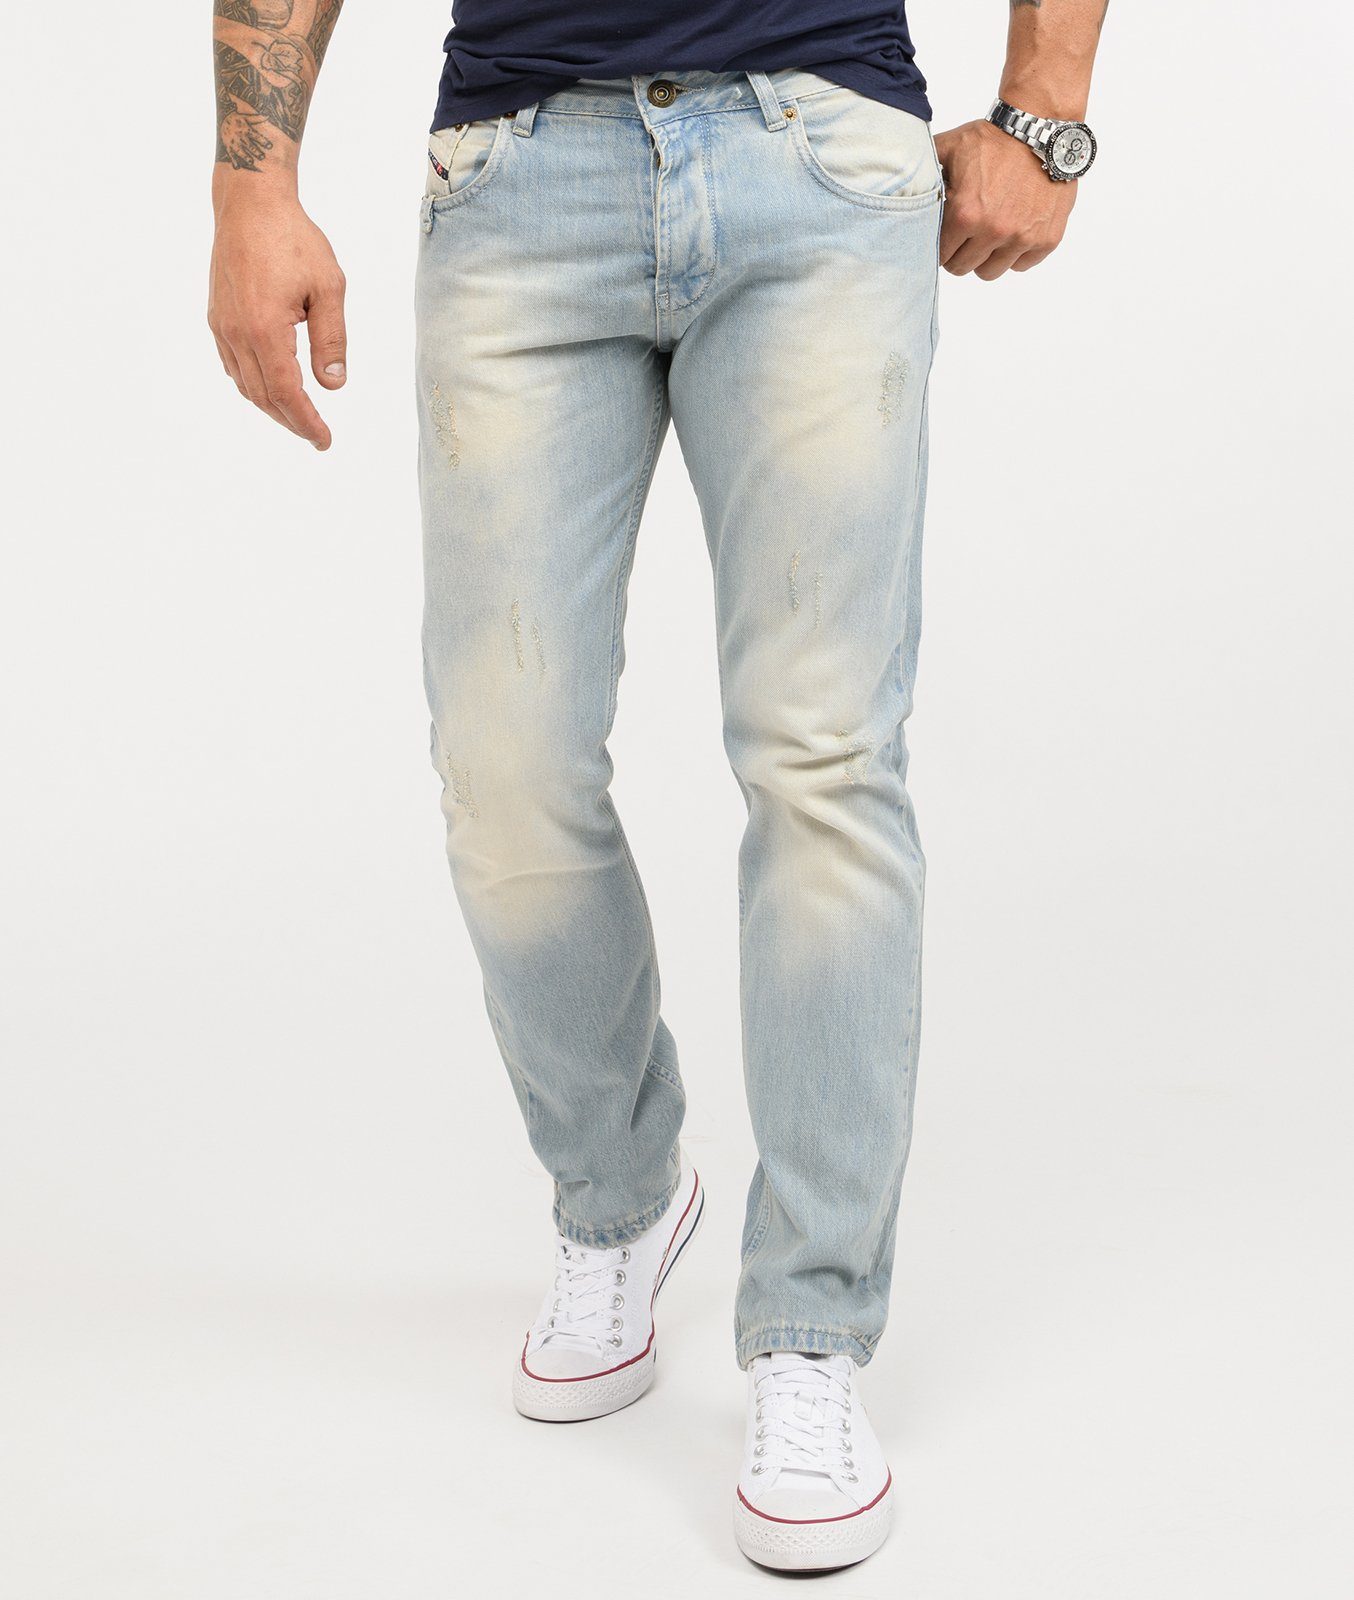 Stonewashed Creek Rock Jeans Herren Regular-fit-Jeans RC-2141 Hellblau